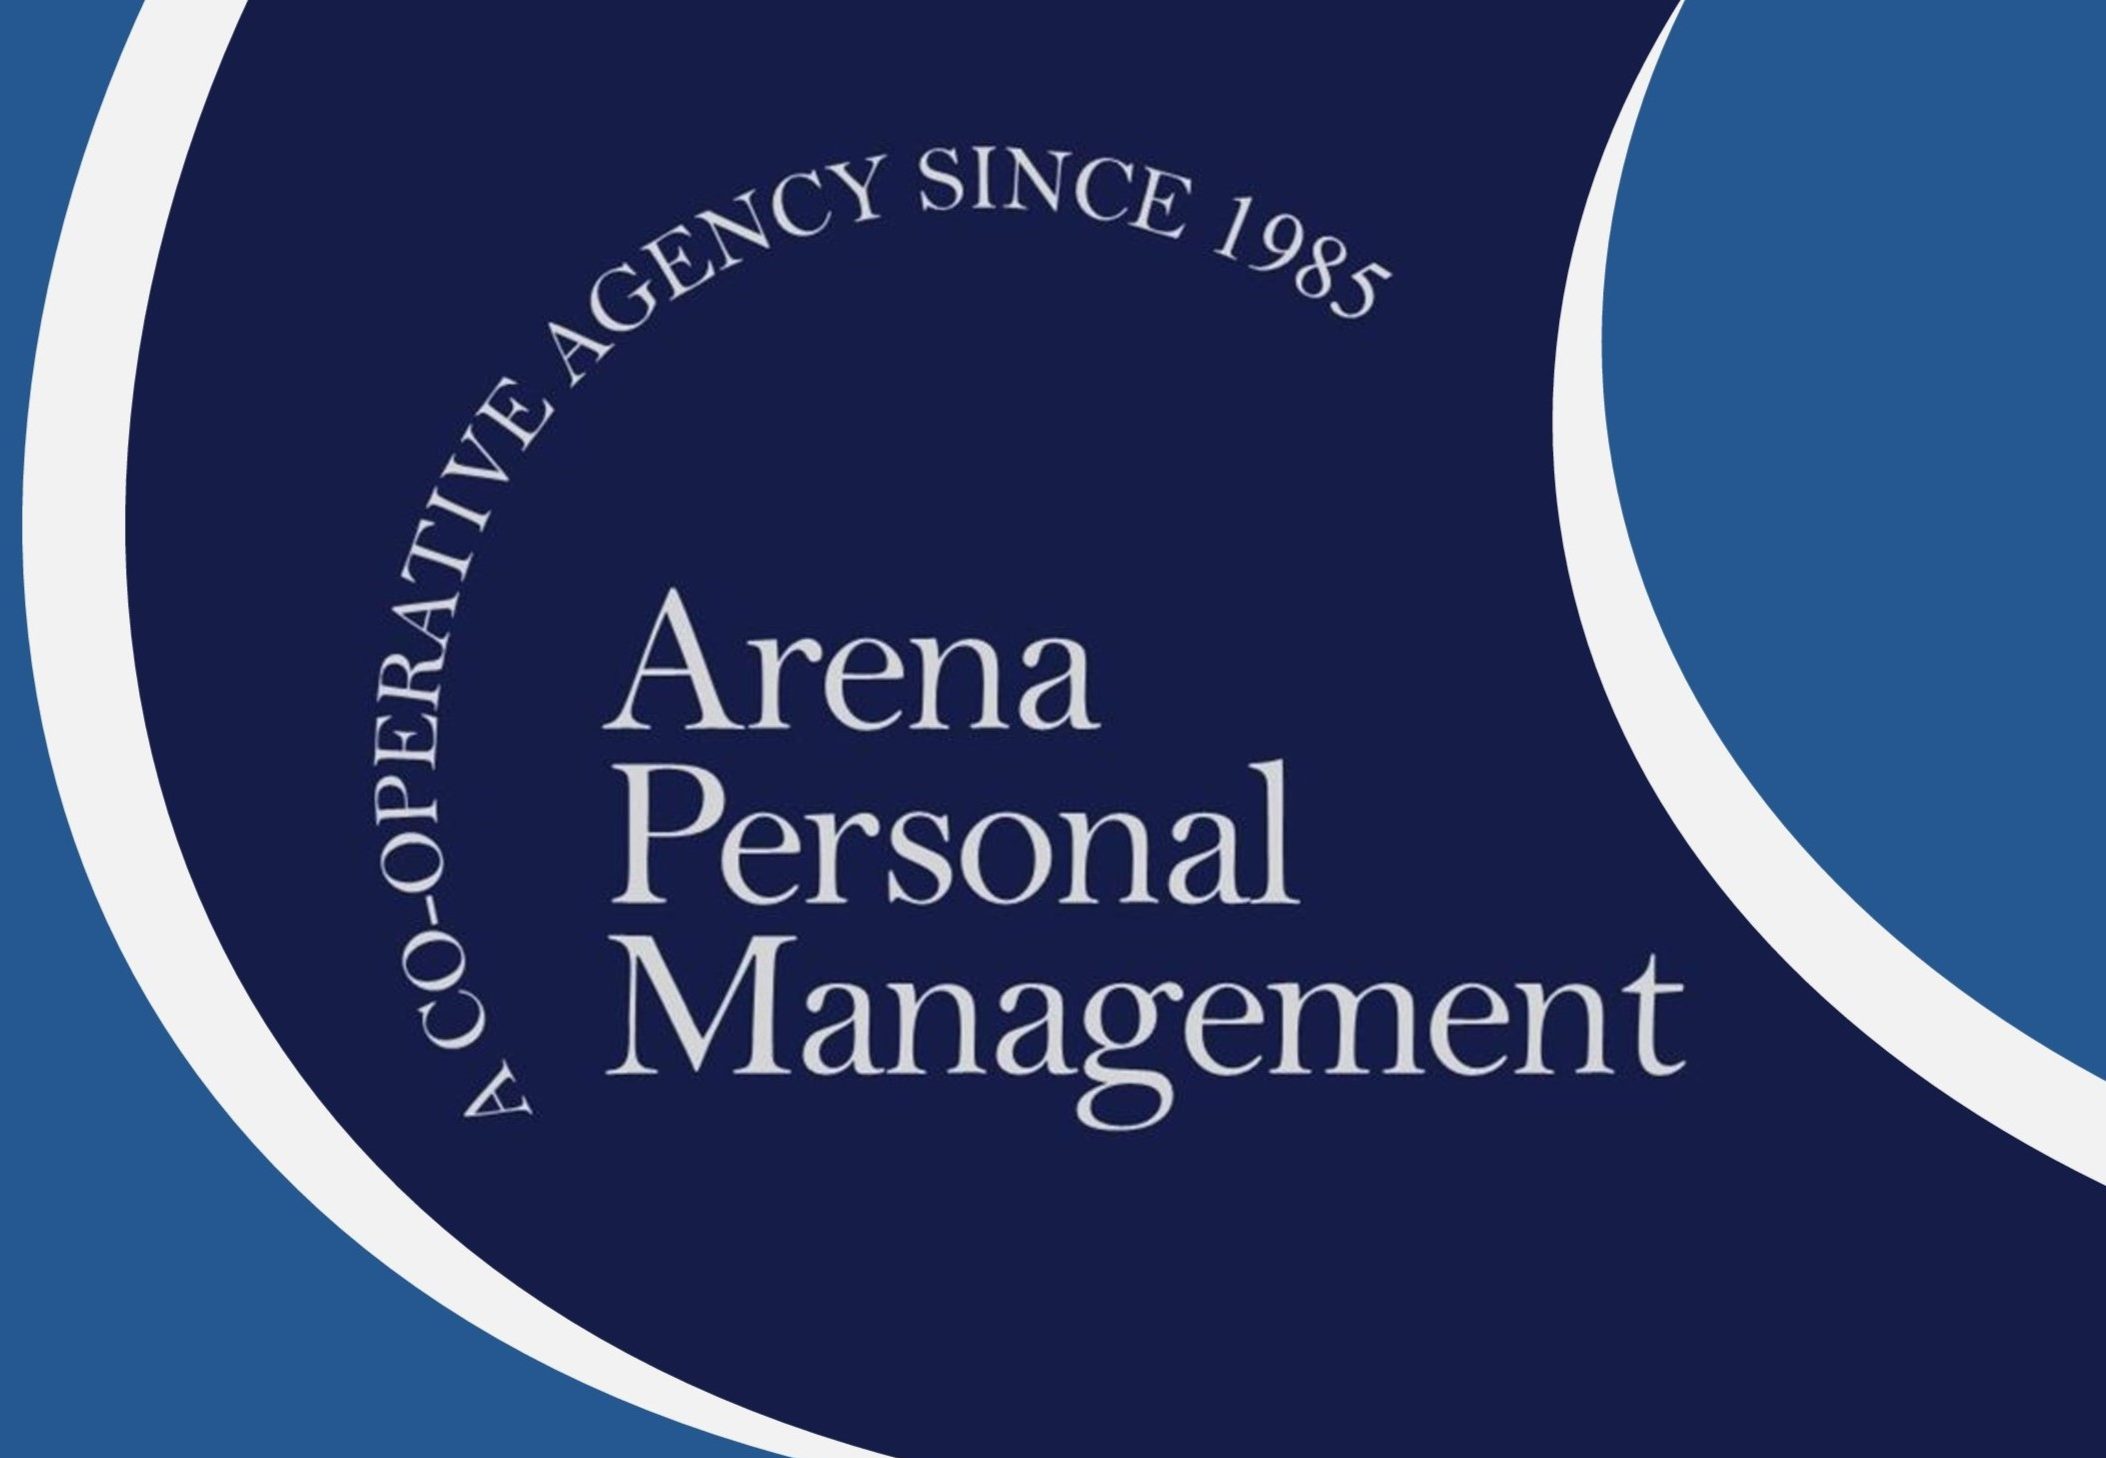 Arena Personal Management Ltd